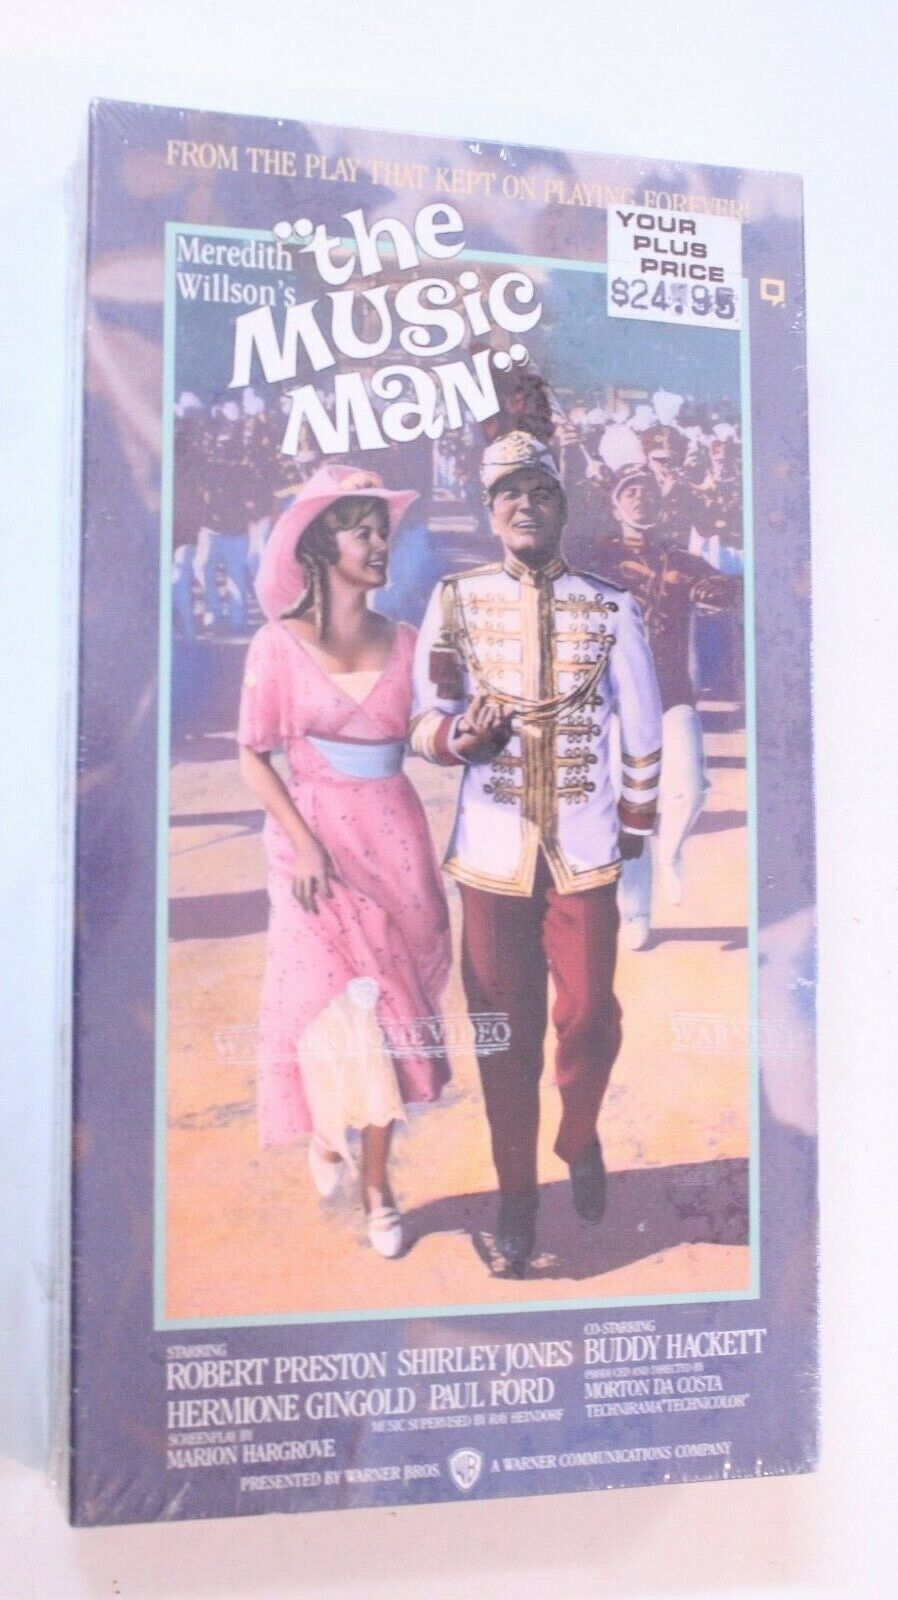 Primary image for Music Man VHS Tape Robert Preston Shirley Jones Buddy Hackett Sealed New Stock